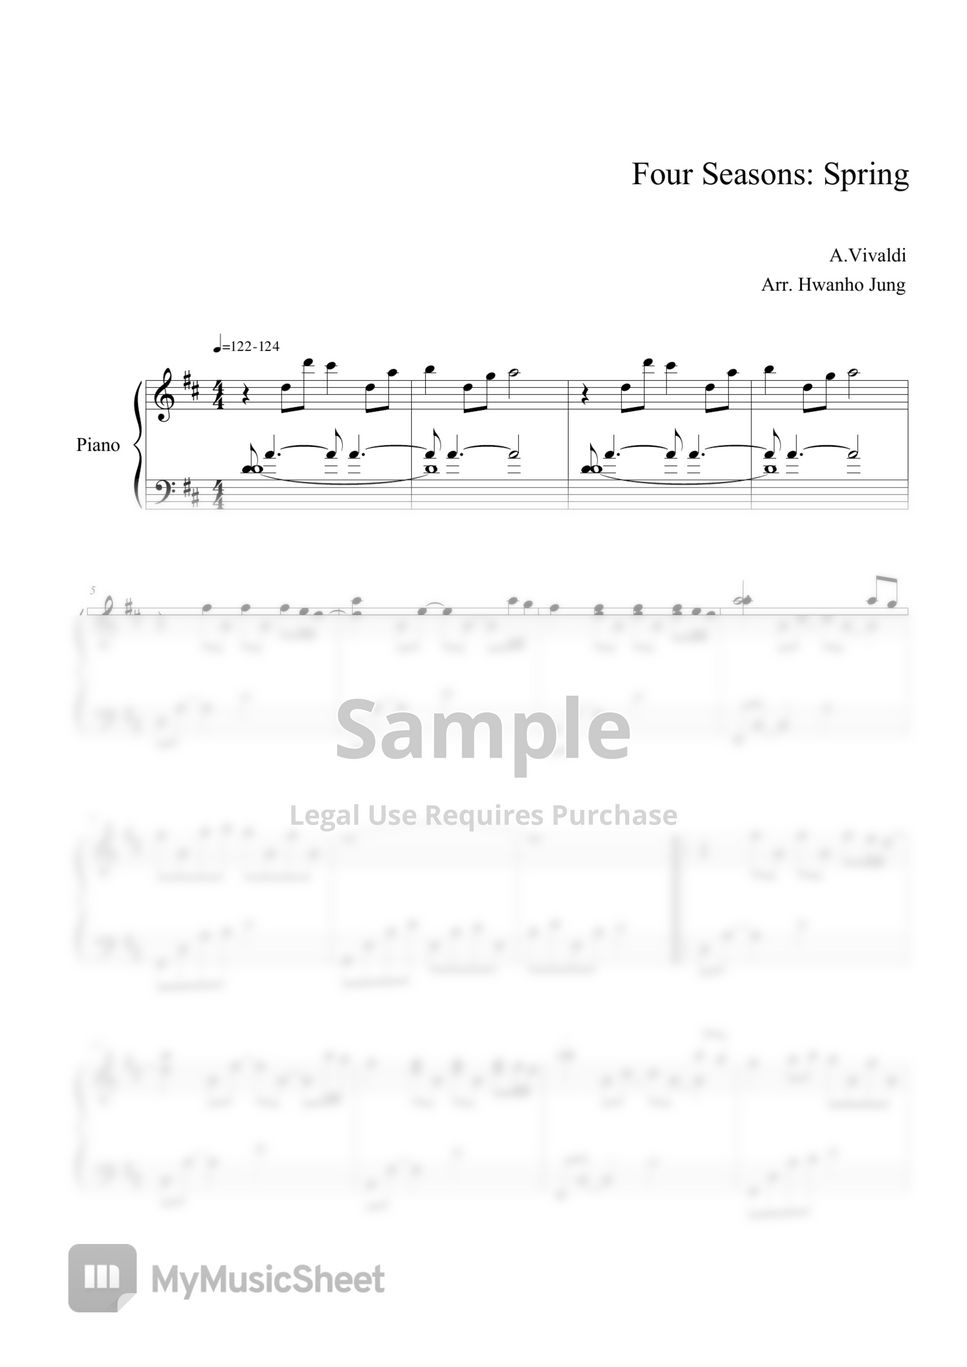 A. Vivaldi - For Season, Spring 1st Mov. (Piano Arrangement) by Hwan Ho Jung